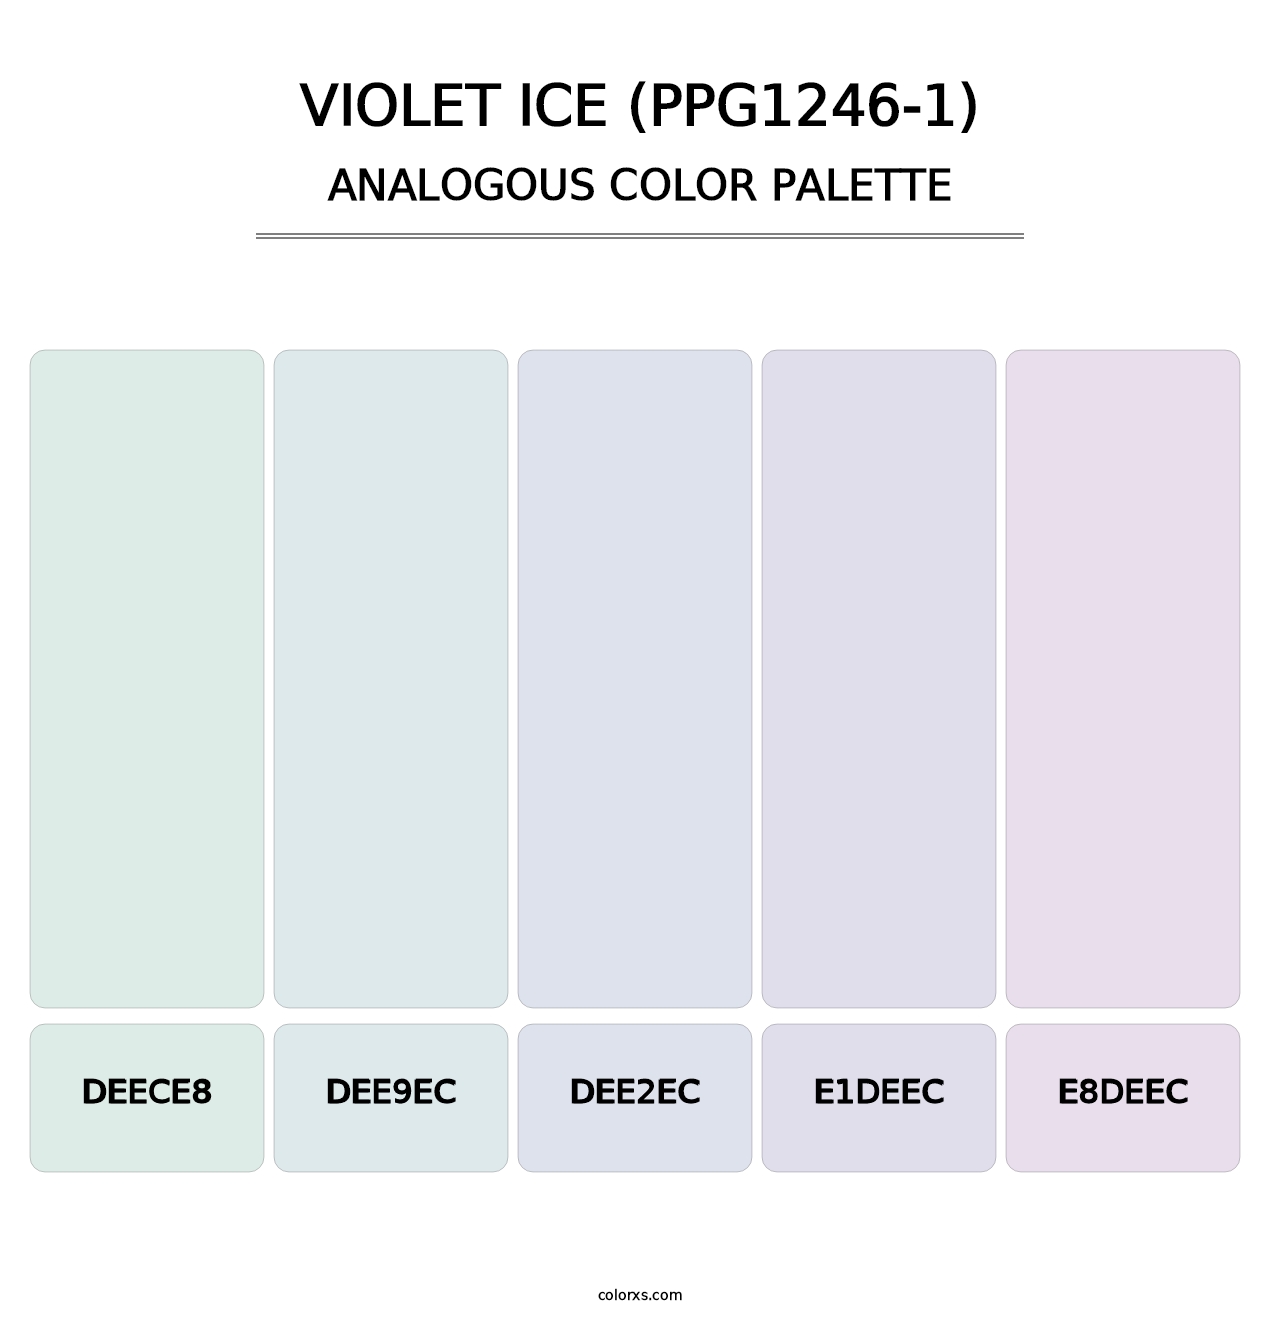 Violet Ice (PPG1246-1) - Analogous Color Palette